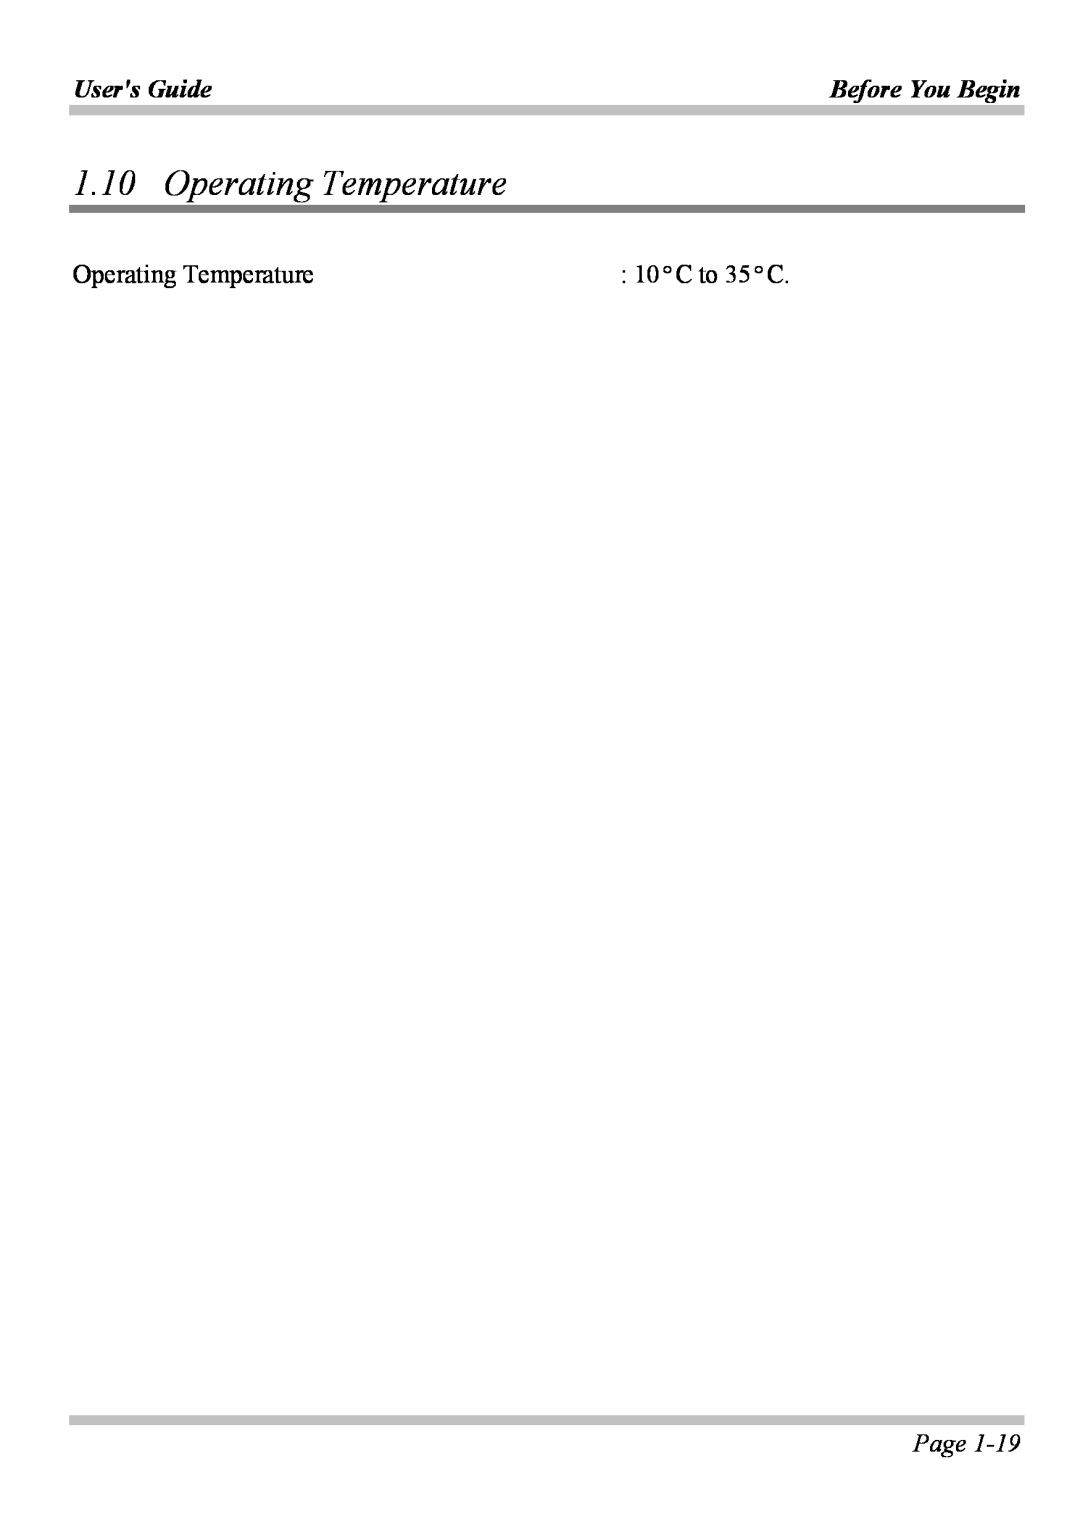 Microsoft W840DI manual Operating Temperature, Users Guide, Before You Begin, 10 ºC to 35 ºC, Page 